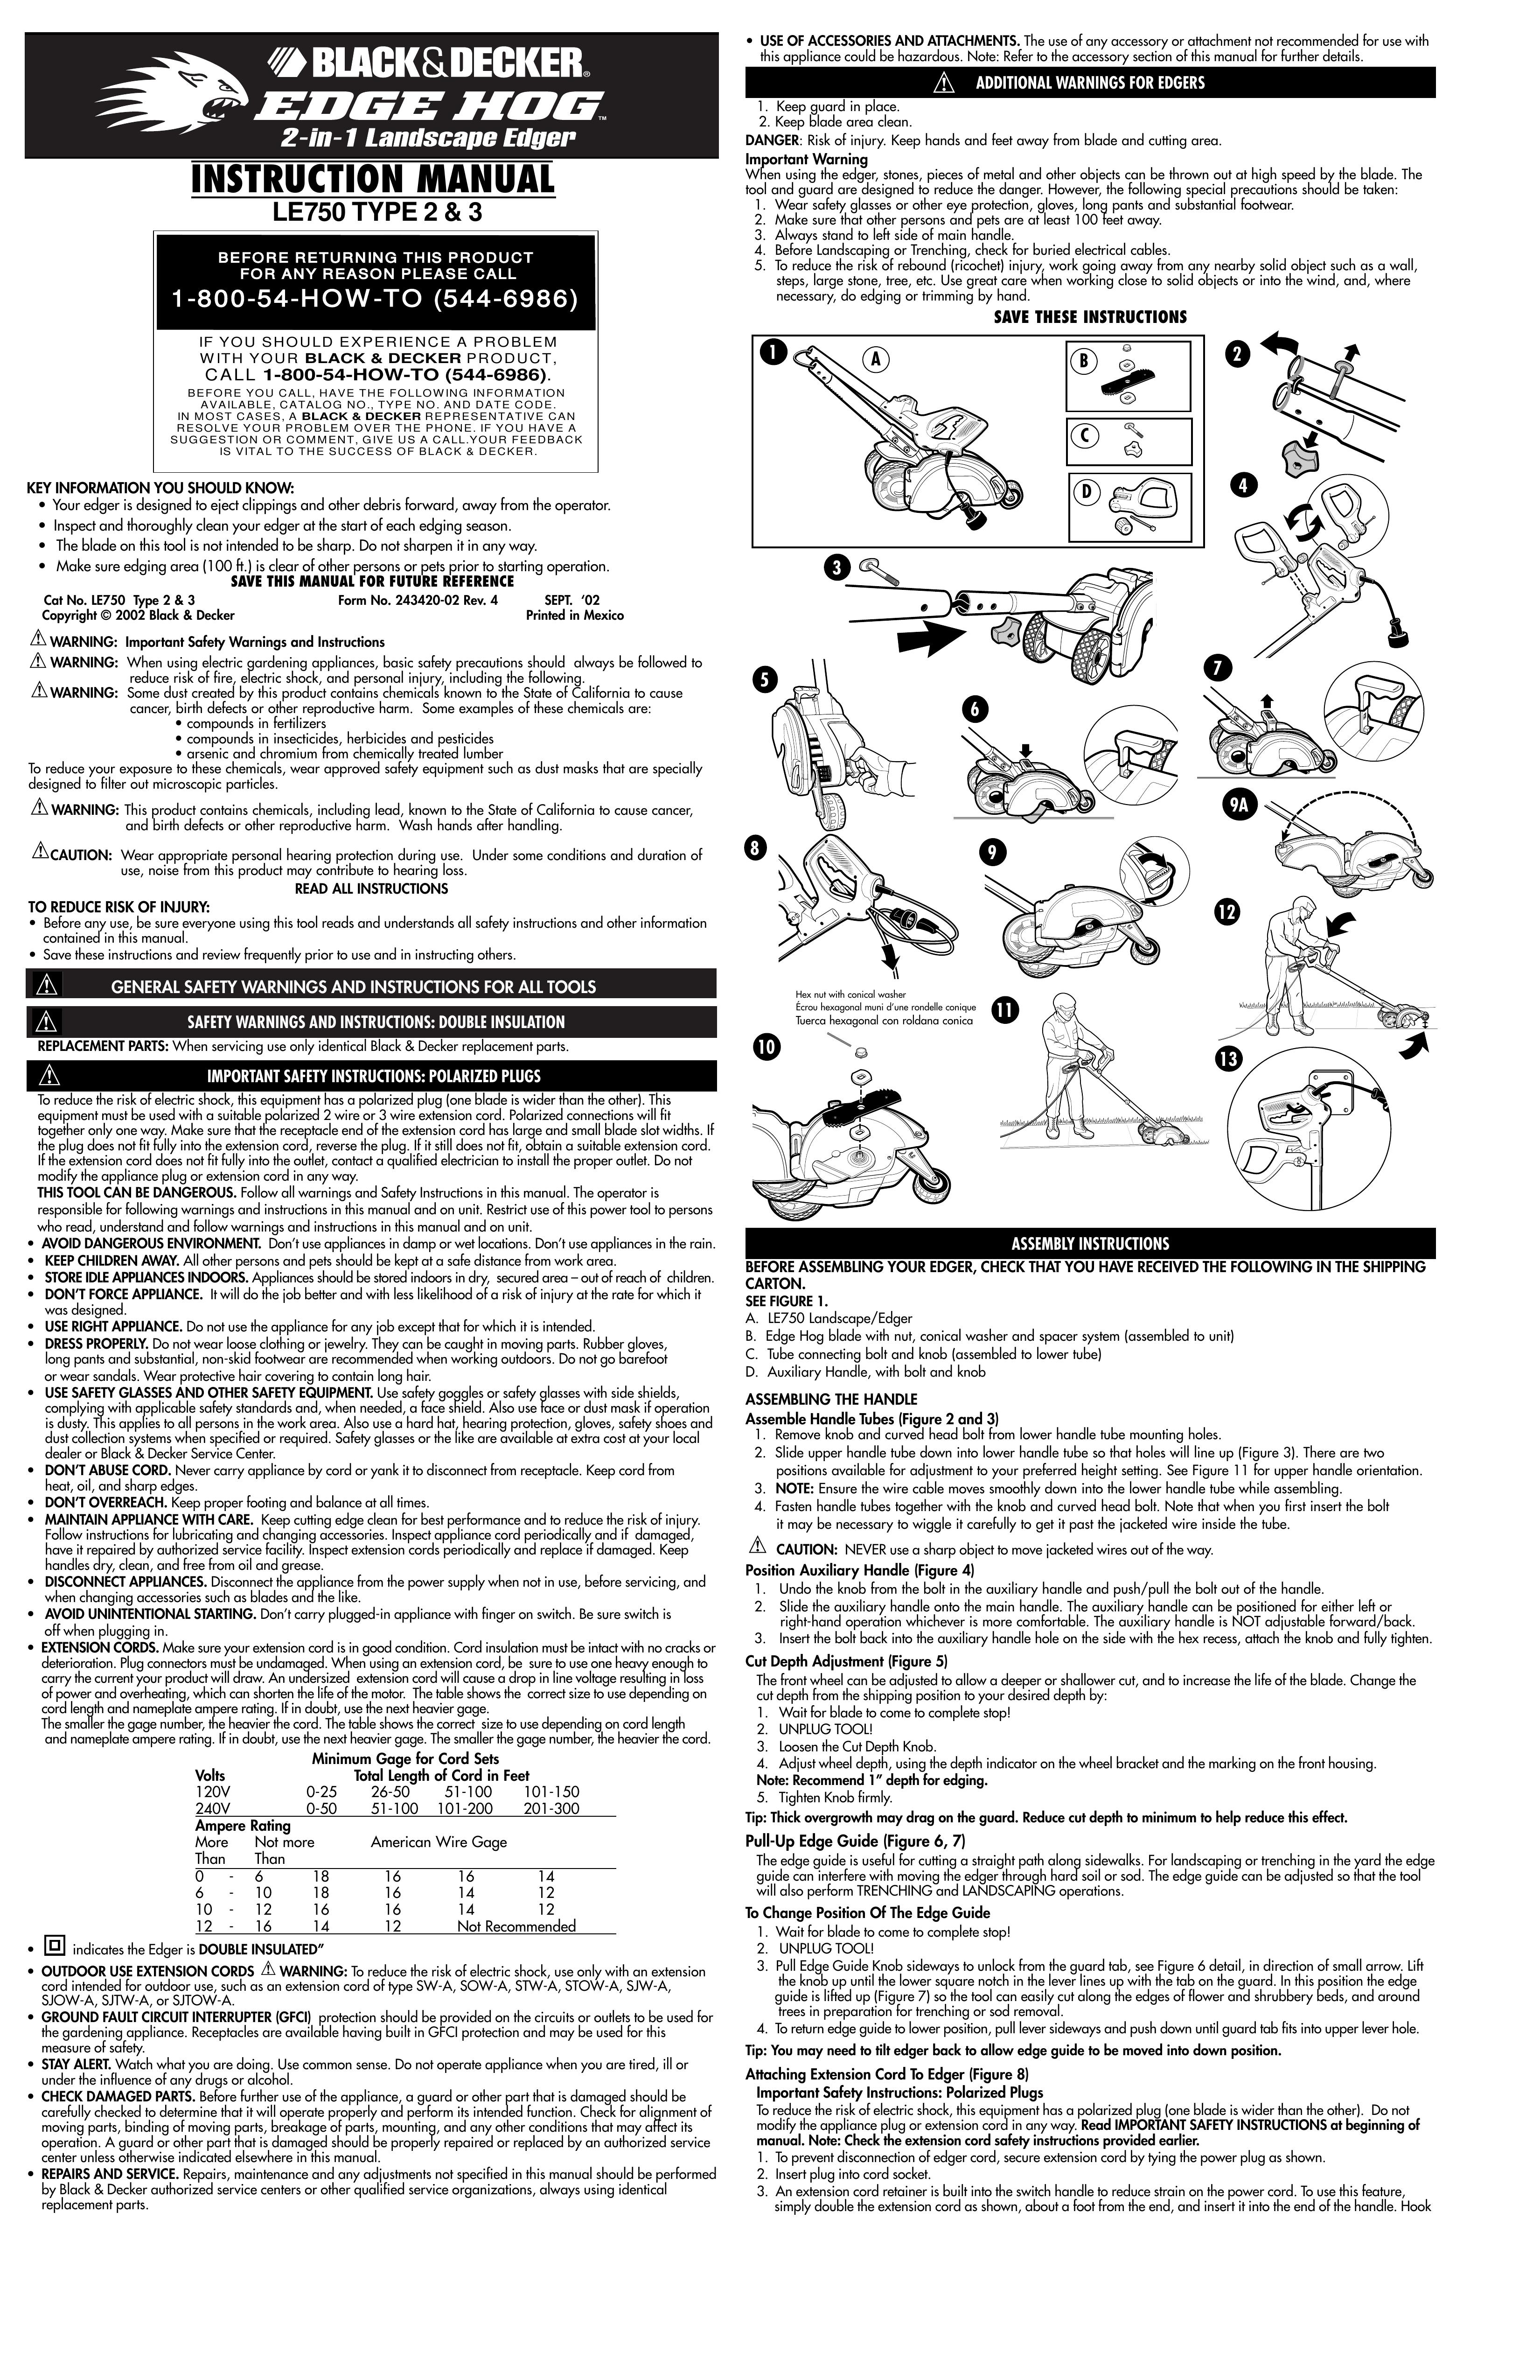 Black & Decker LE750R Edger User Manual